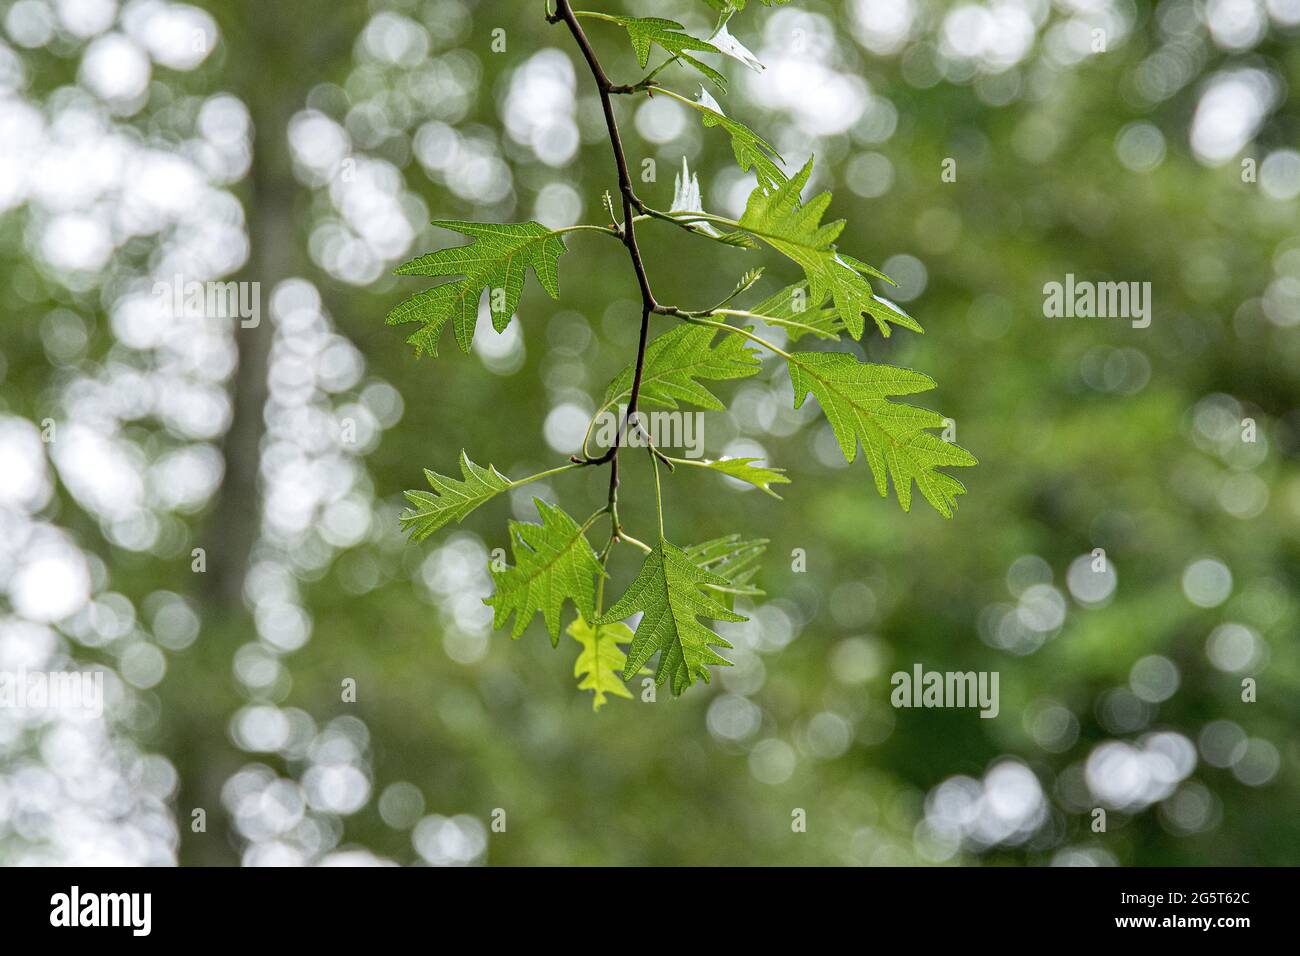 Alder de Laciniate (Alnus glutinosa 'laciniata', Alnus glutinosa laciniata), branche avec feuilles de cultivar laciniata Banque D'Images